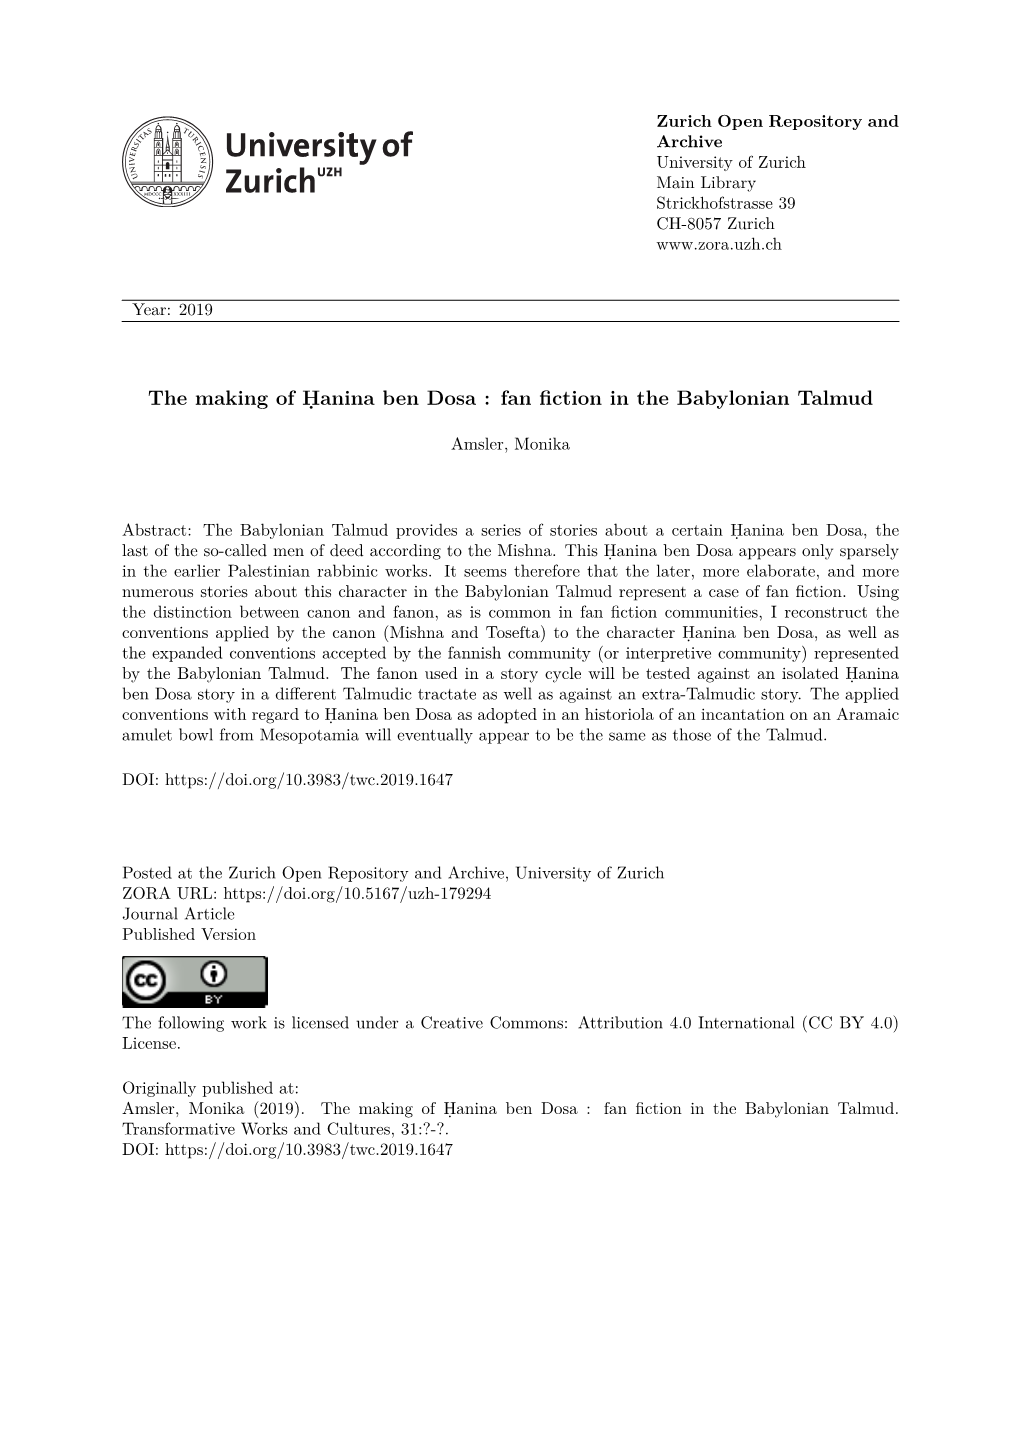 'The Making of Ḥanina Ben Dosa : Fan Fiction in the Babylonian Talmud'